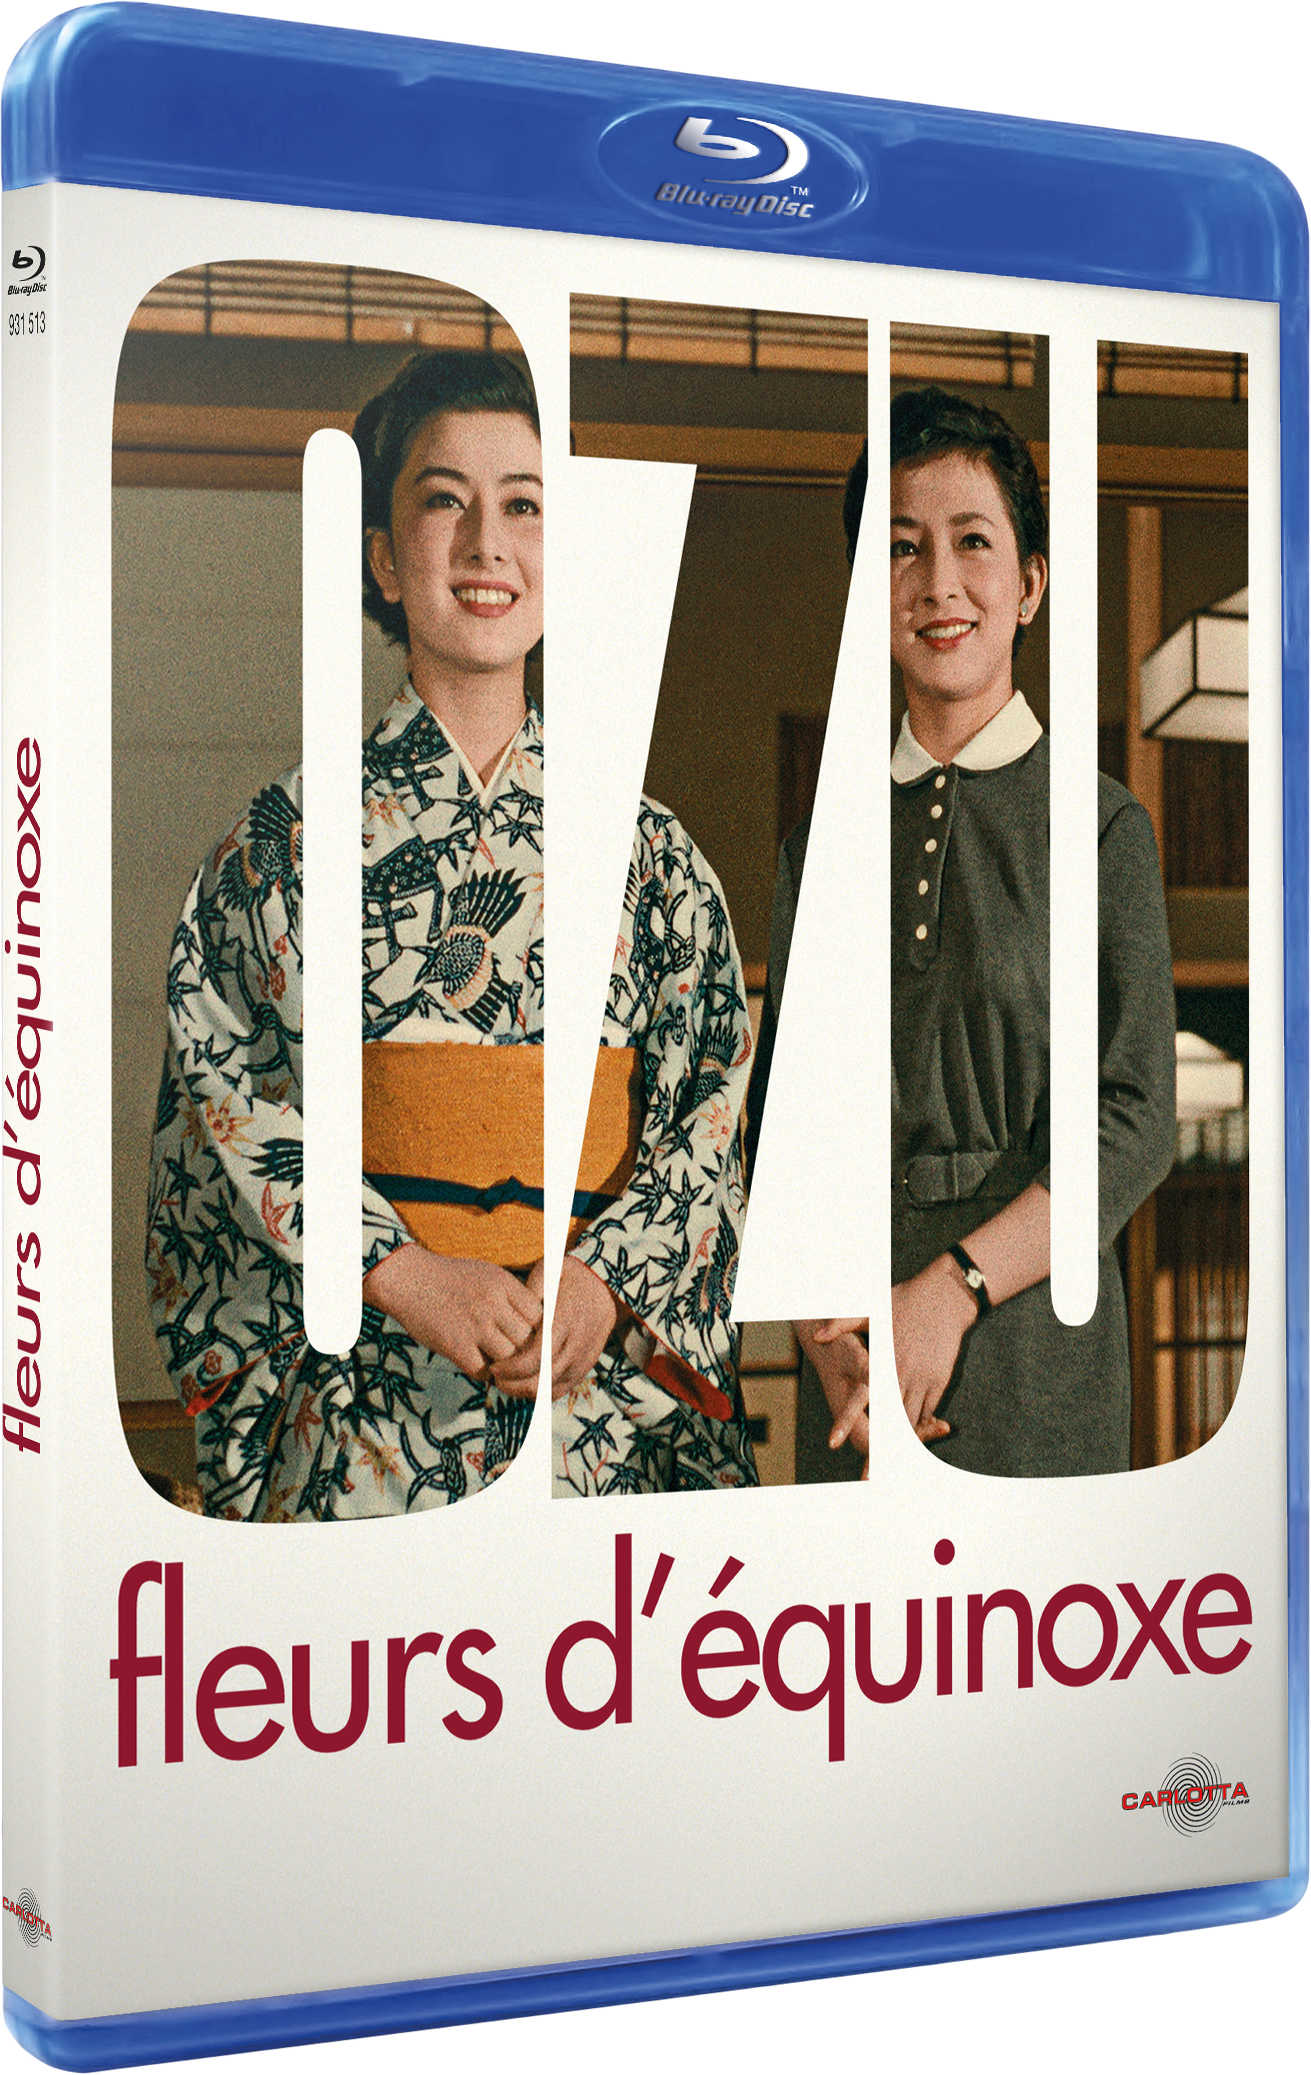 Equinox Flowers by Yasujiro Ozu